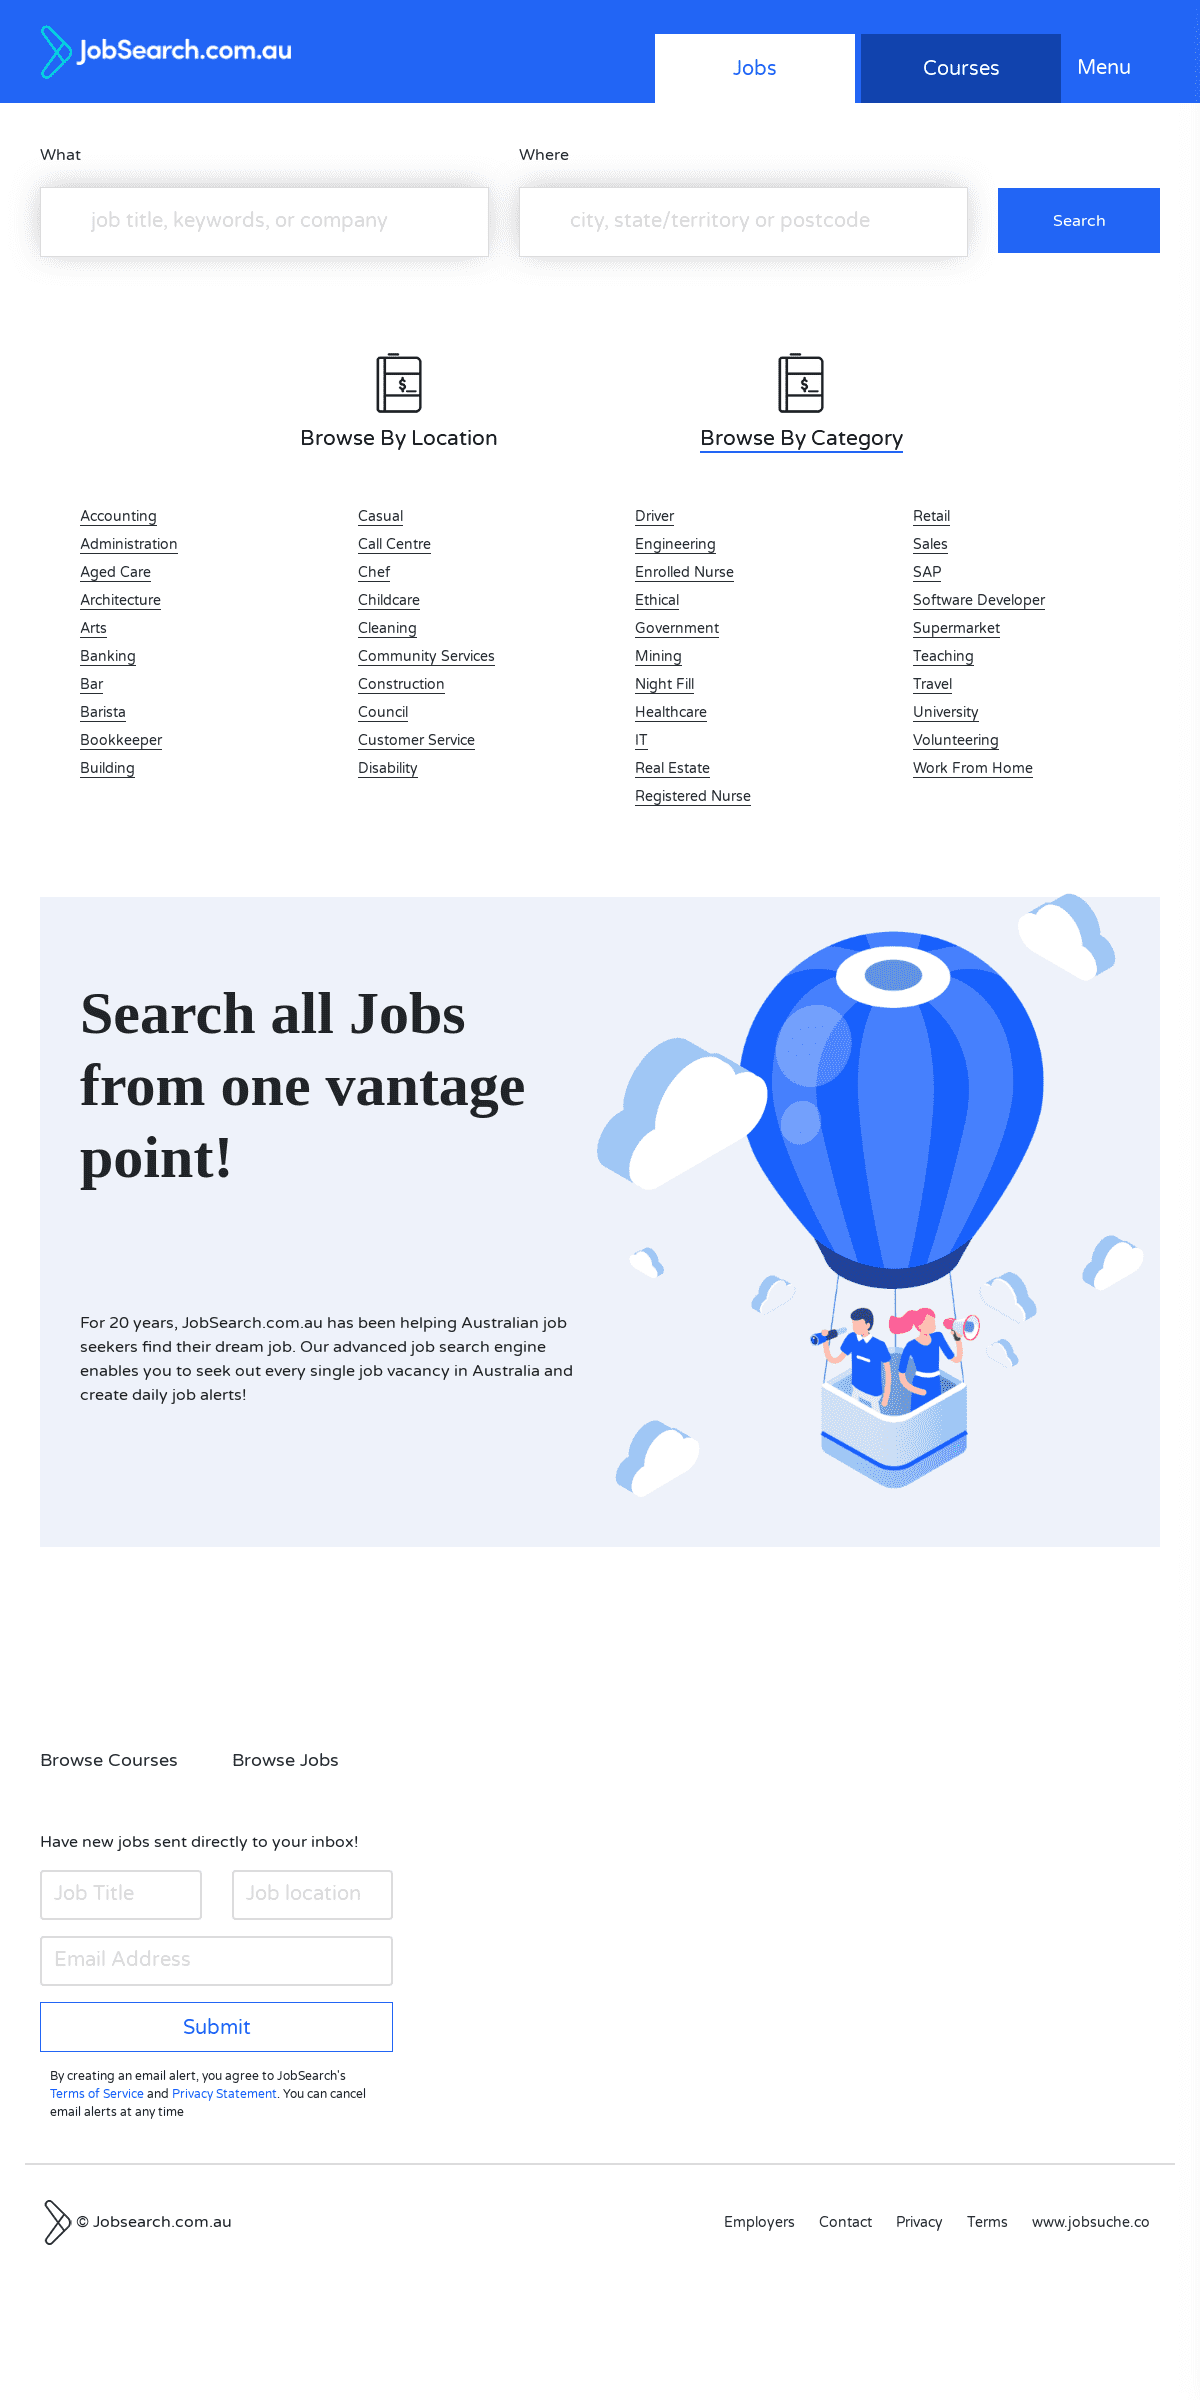 A complete backup of jobsearch.com.au